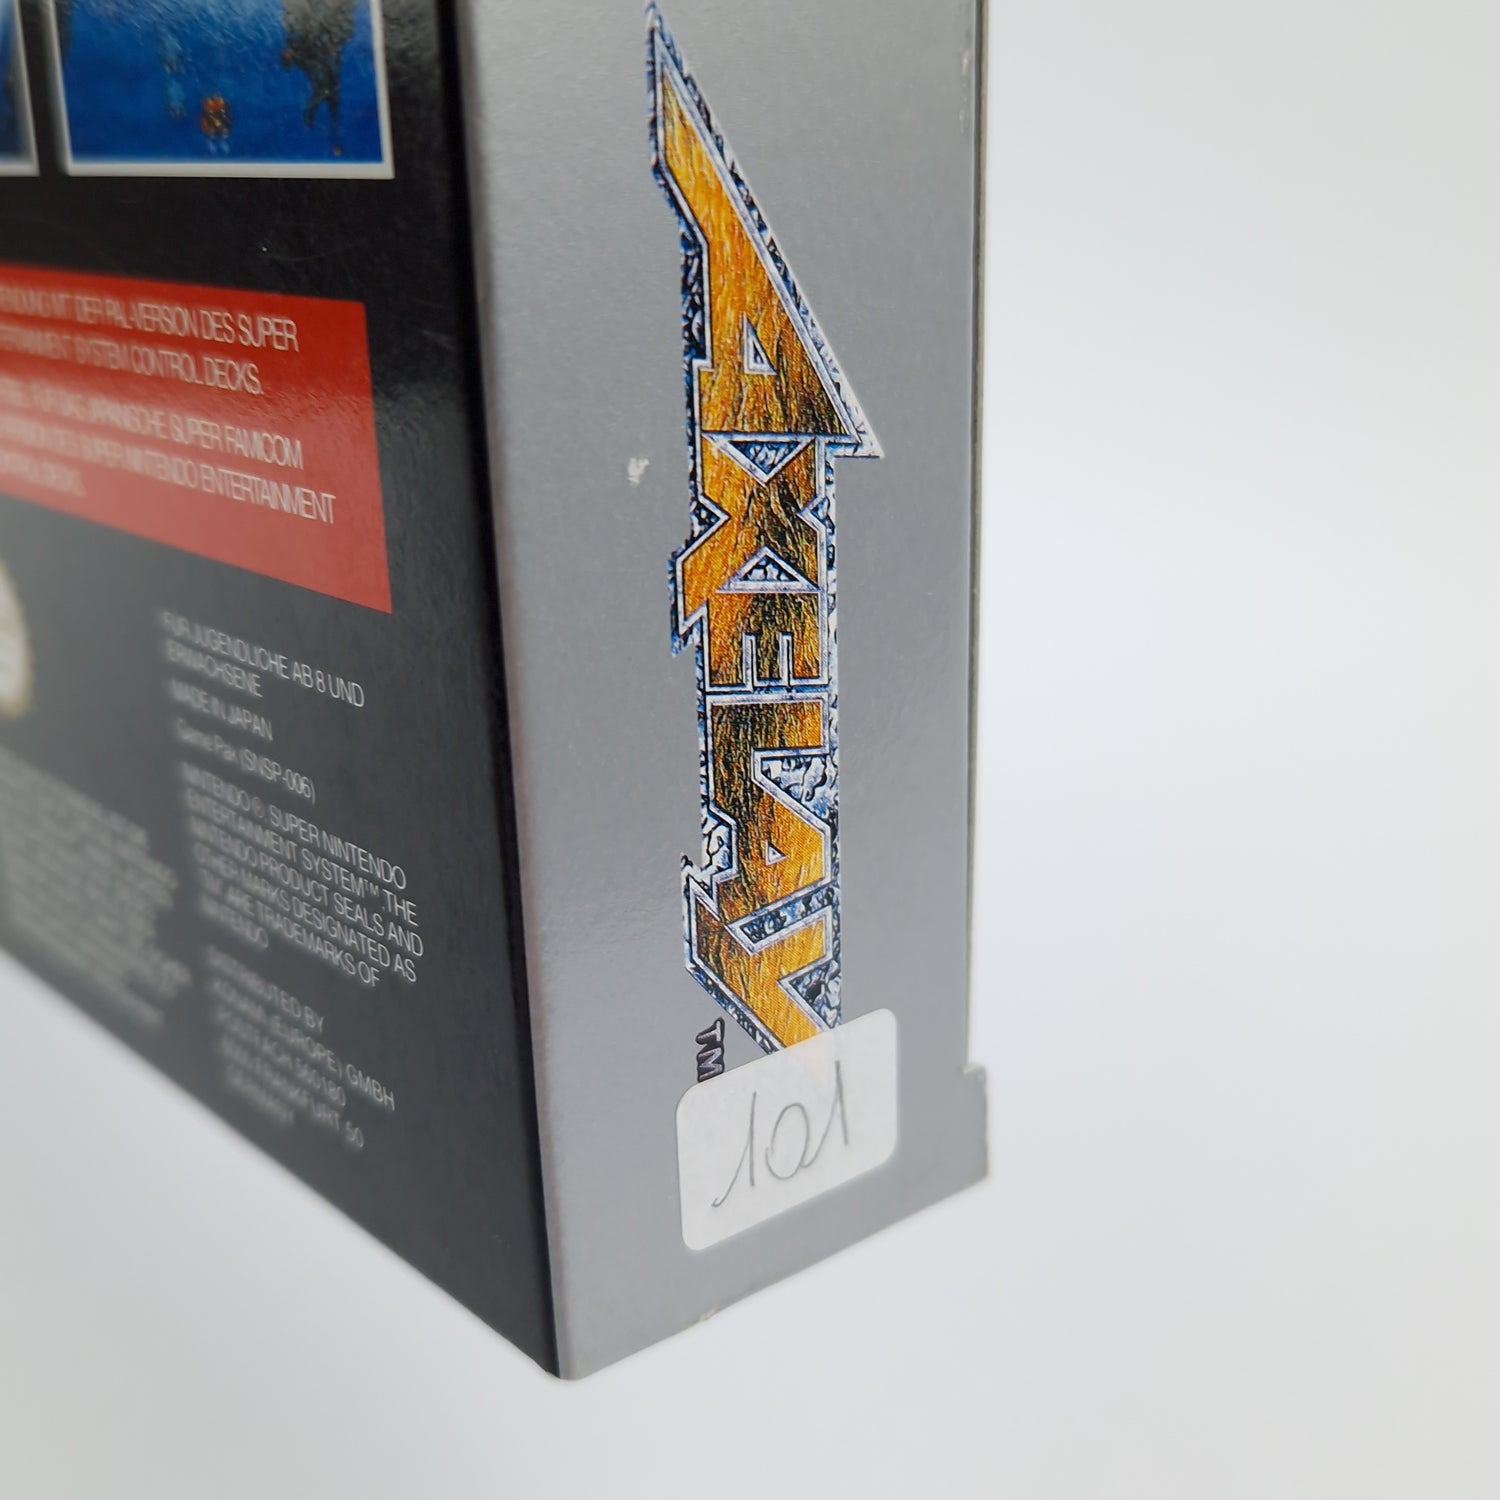 Super Nintendo Game: Axelay - Module Instructions OVP cib / SNES PAL NOE Konami